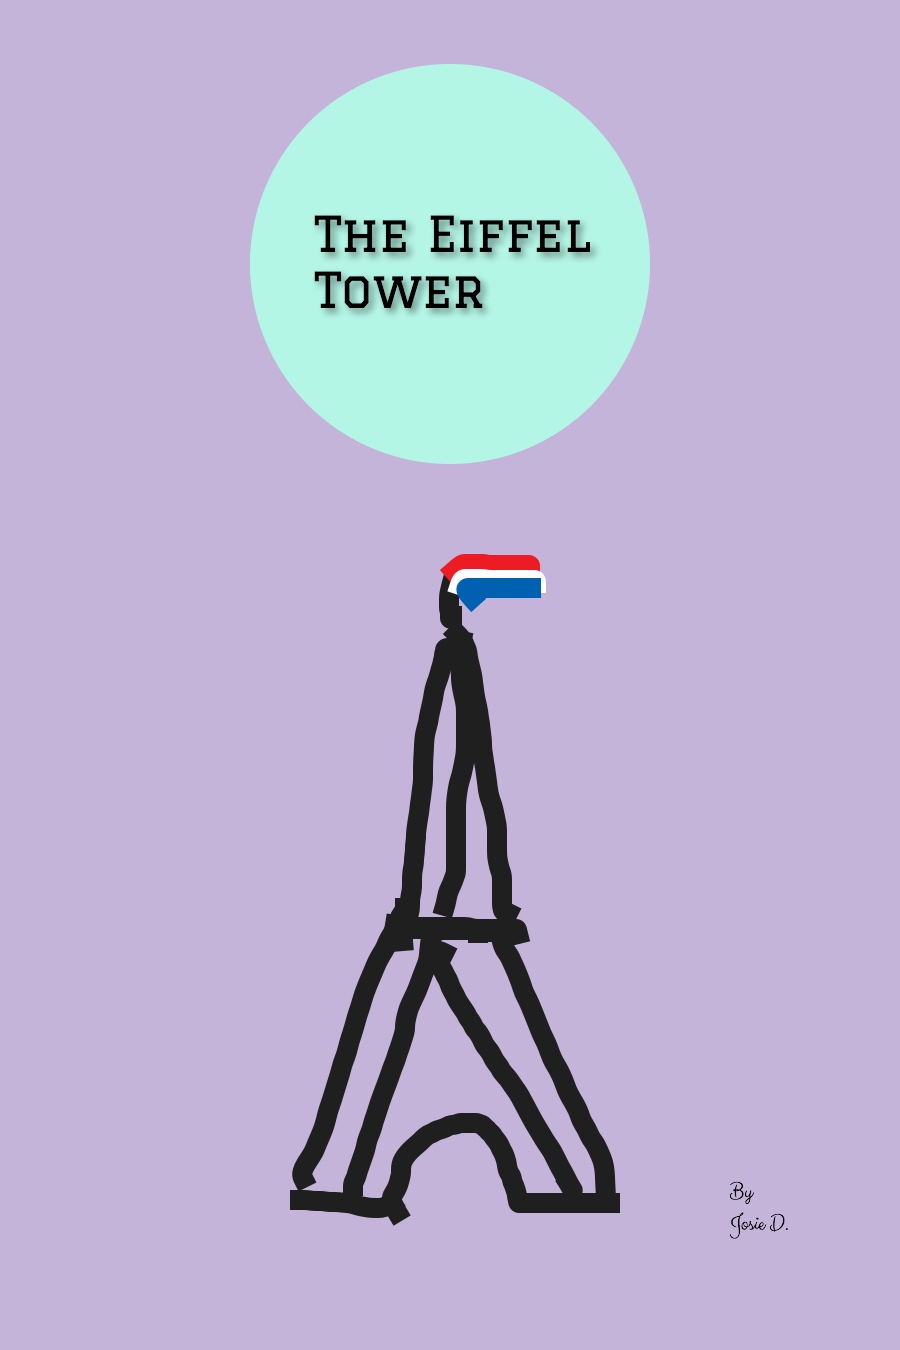 The Eiffel Tower by Josie D